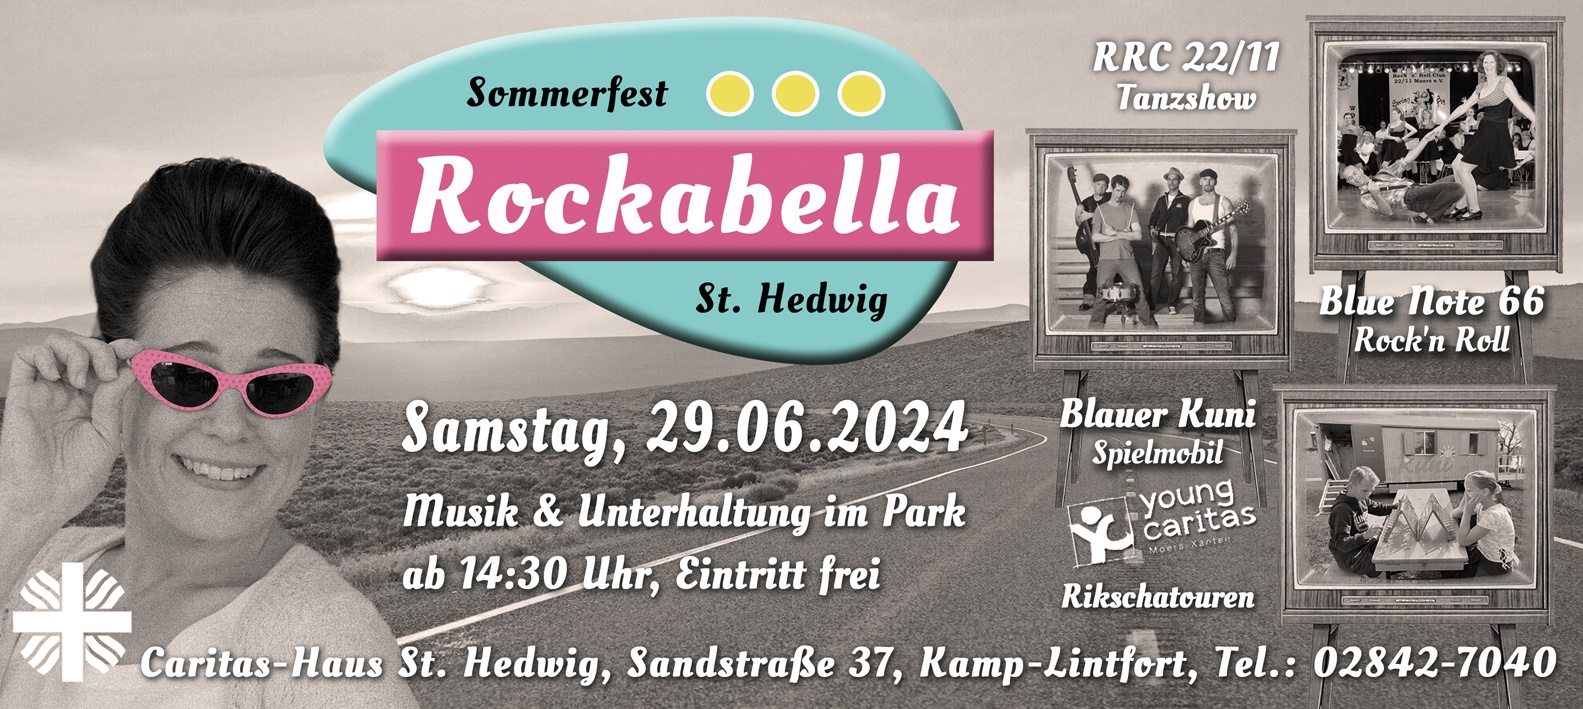 Sommerfest Caritas Rockabella